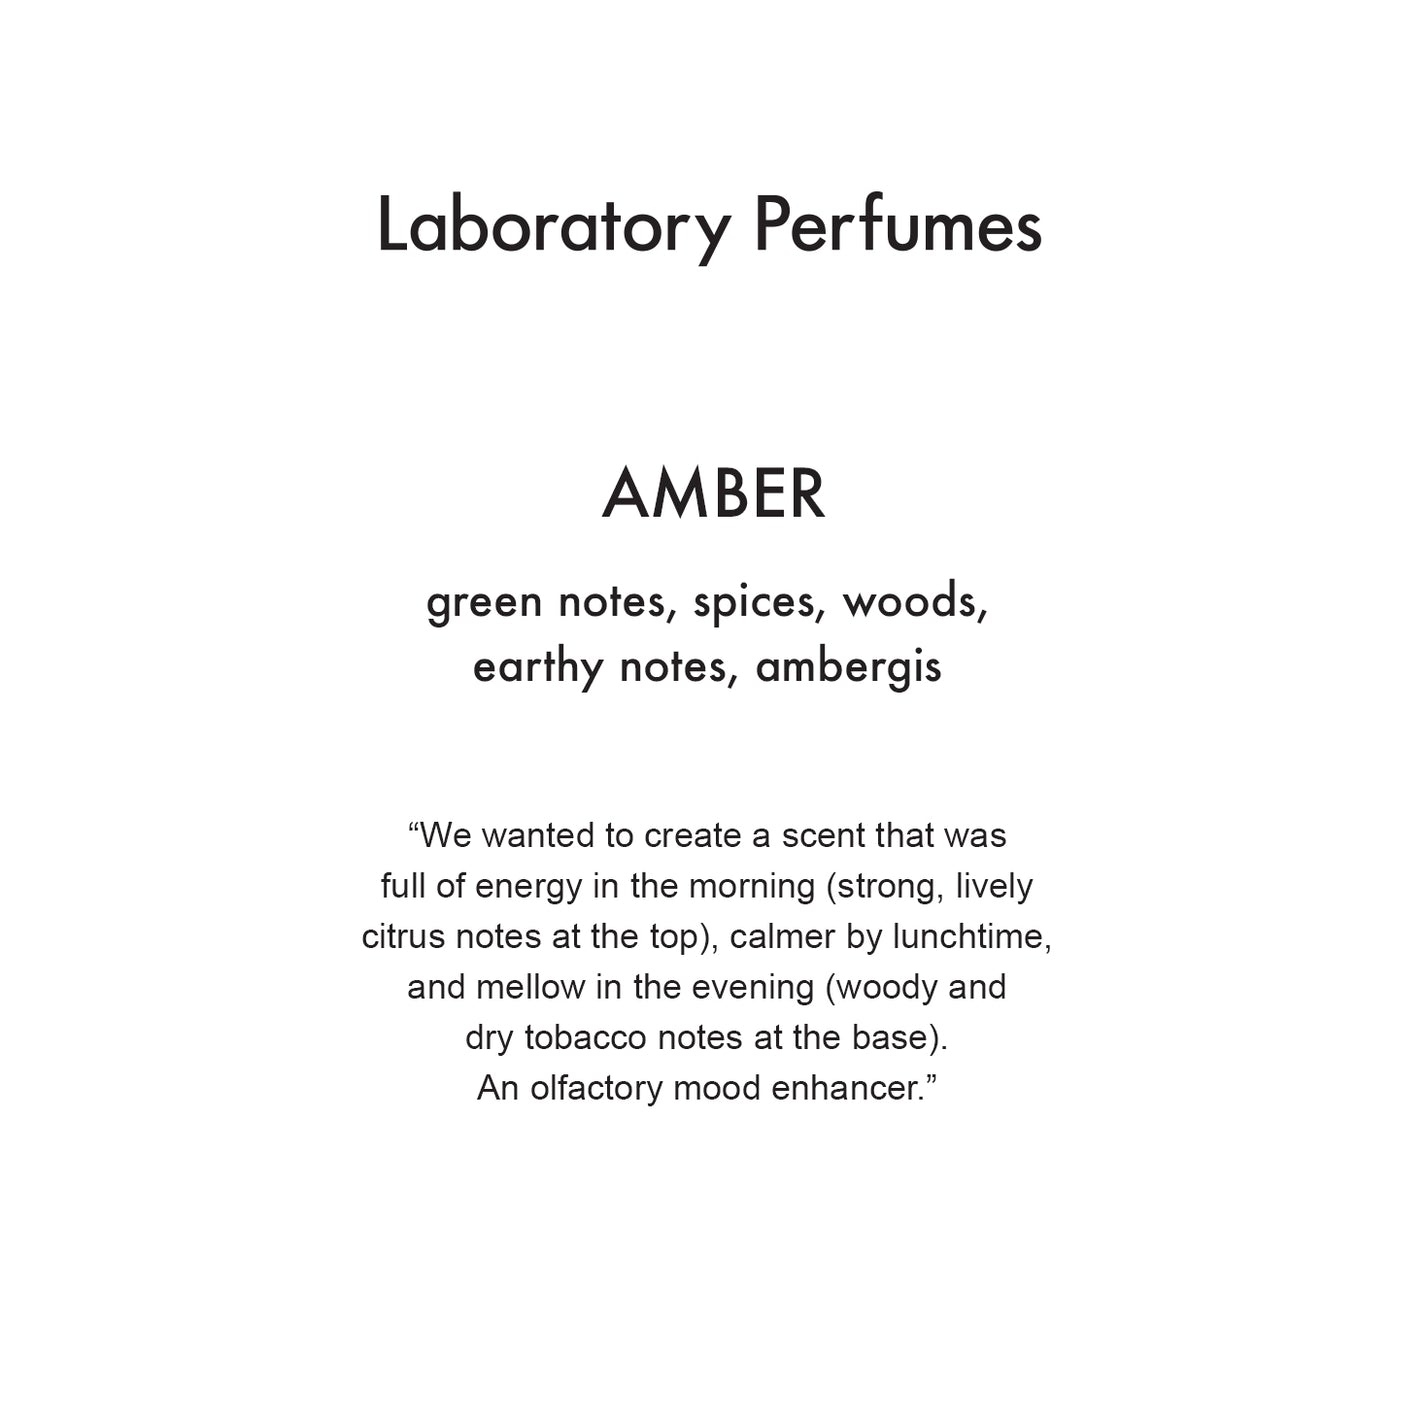 Sample Vial - Laboratory Perfumes Amber EDT